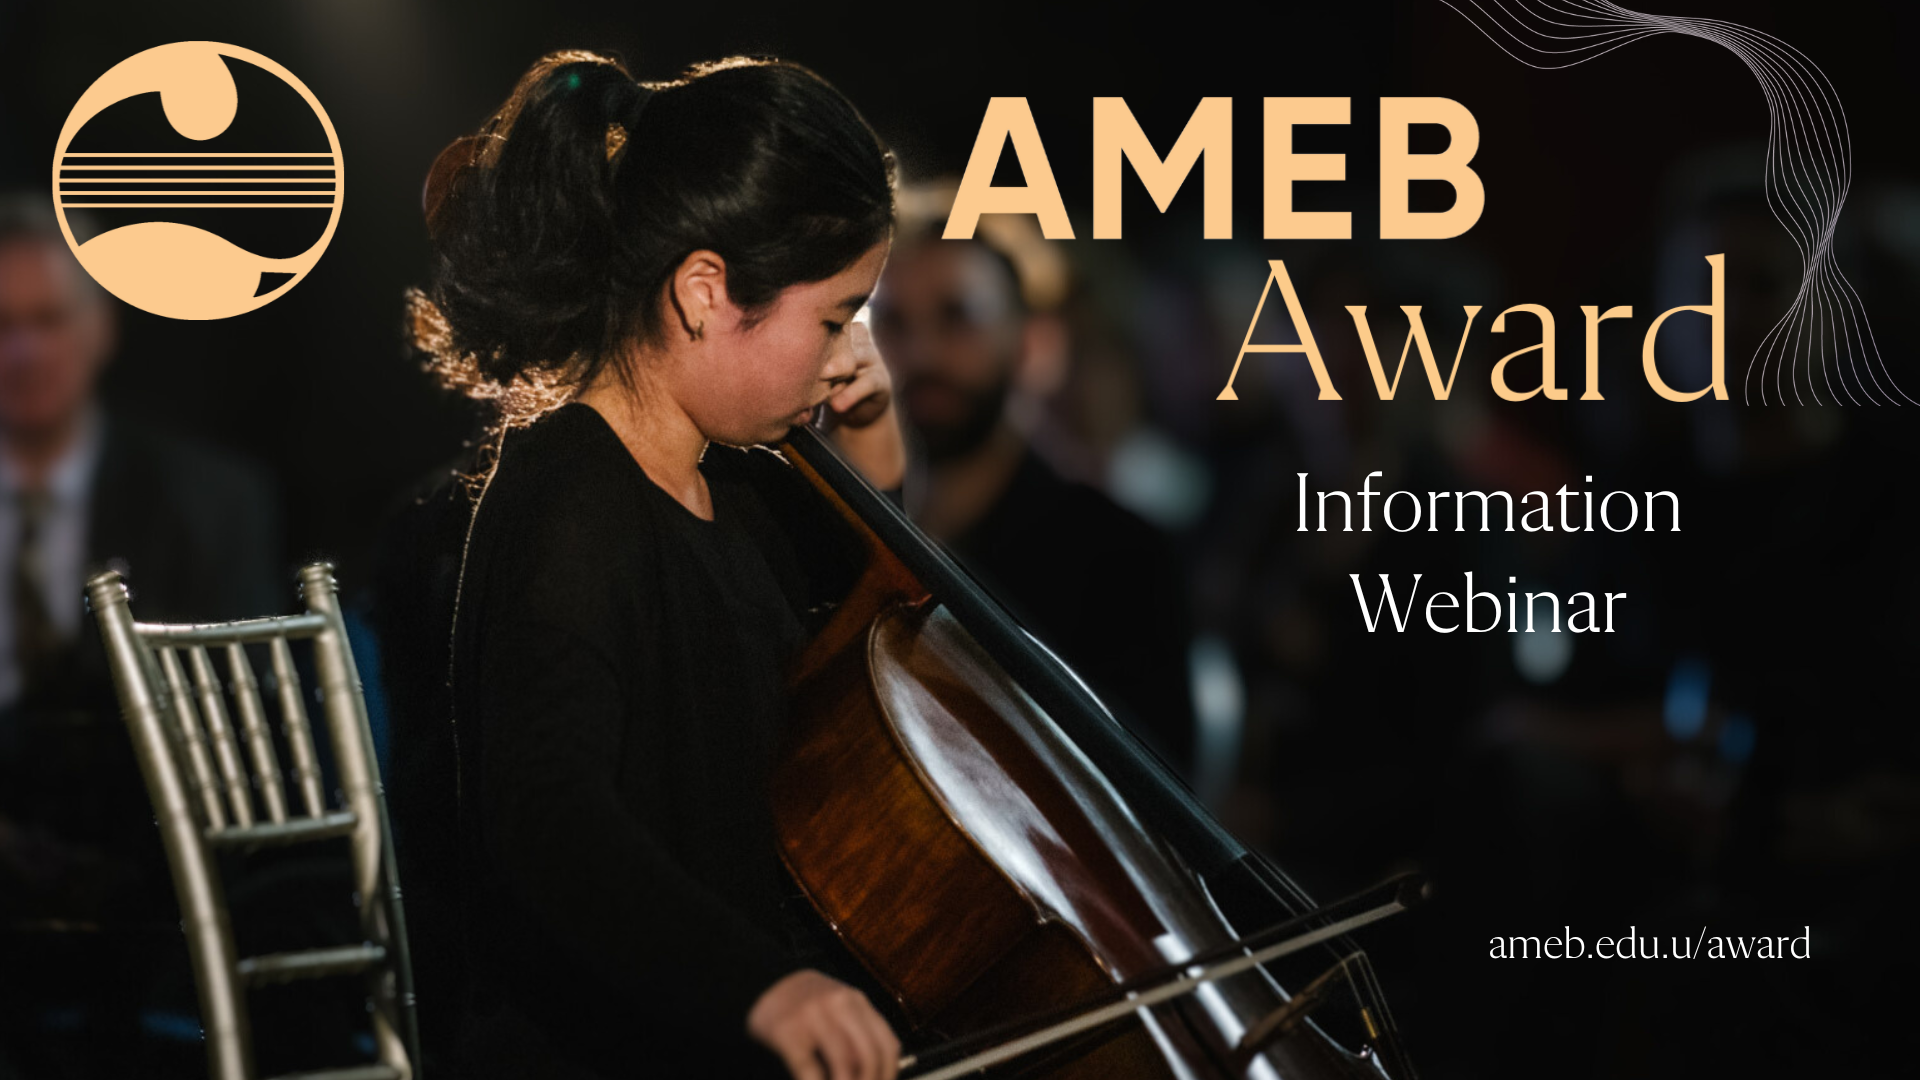 AMEB Award Information Webinar